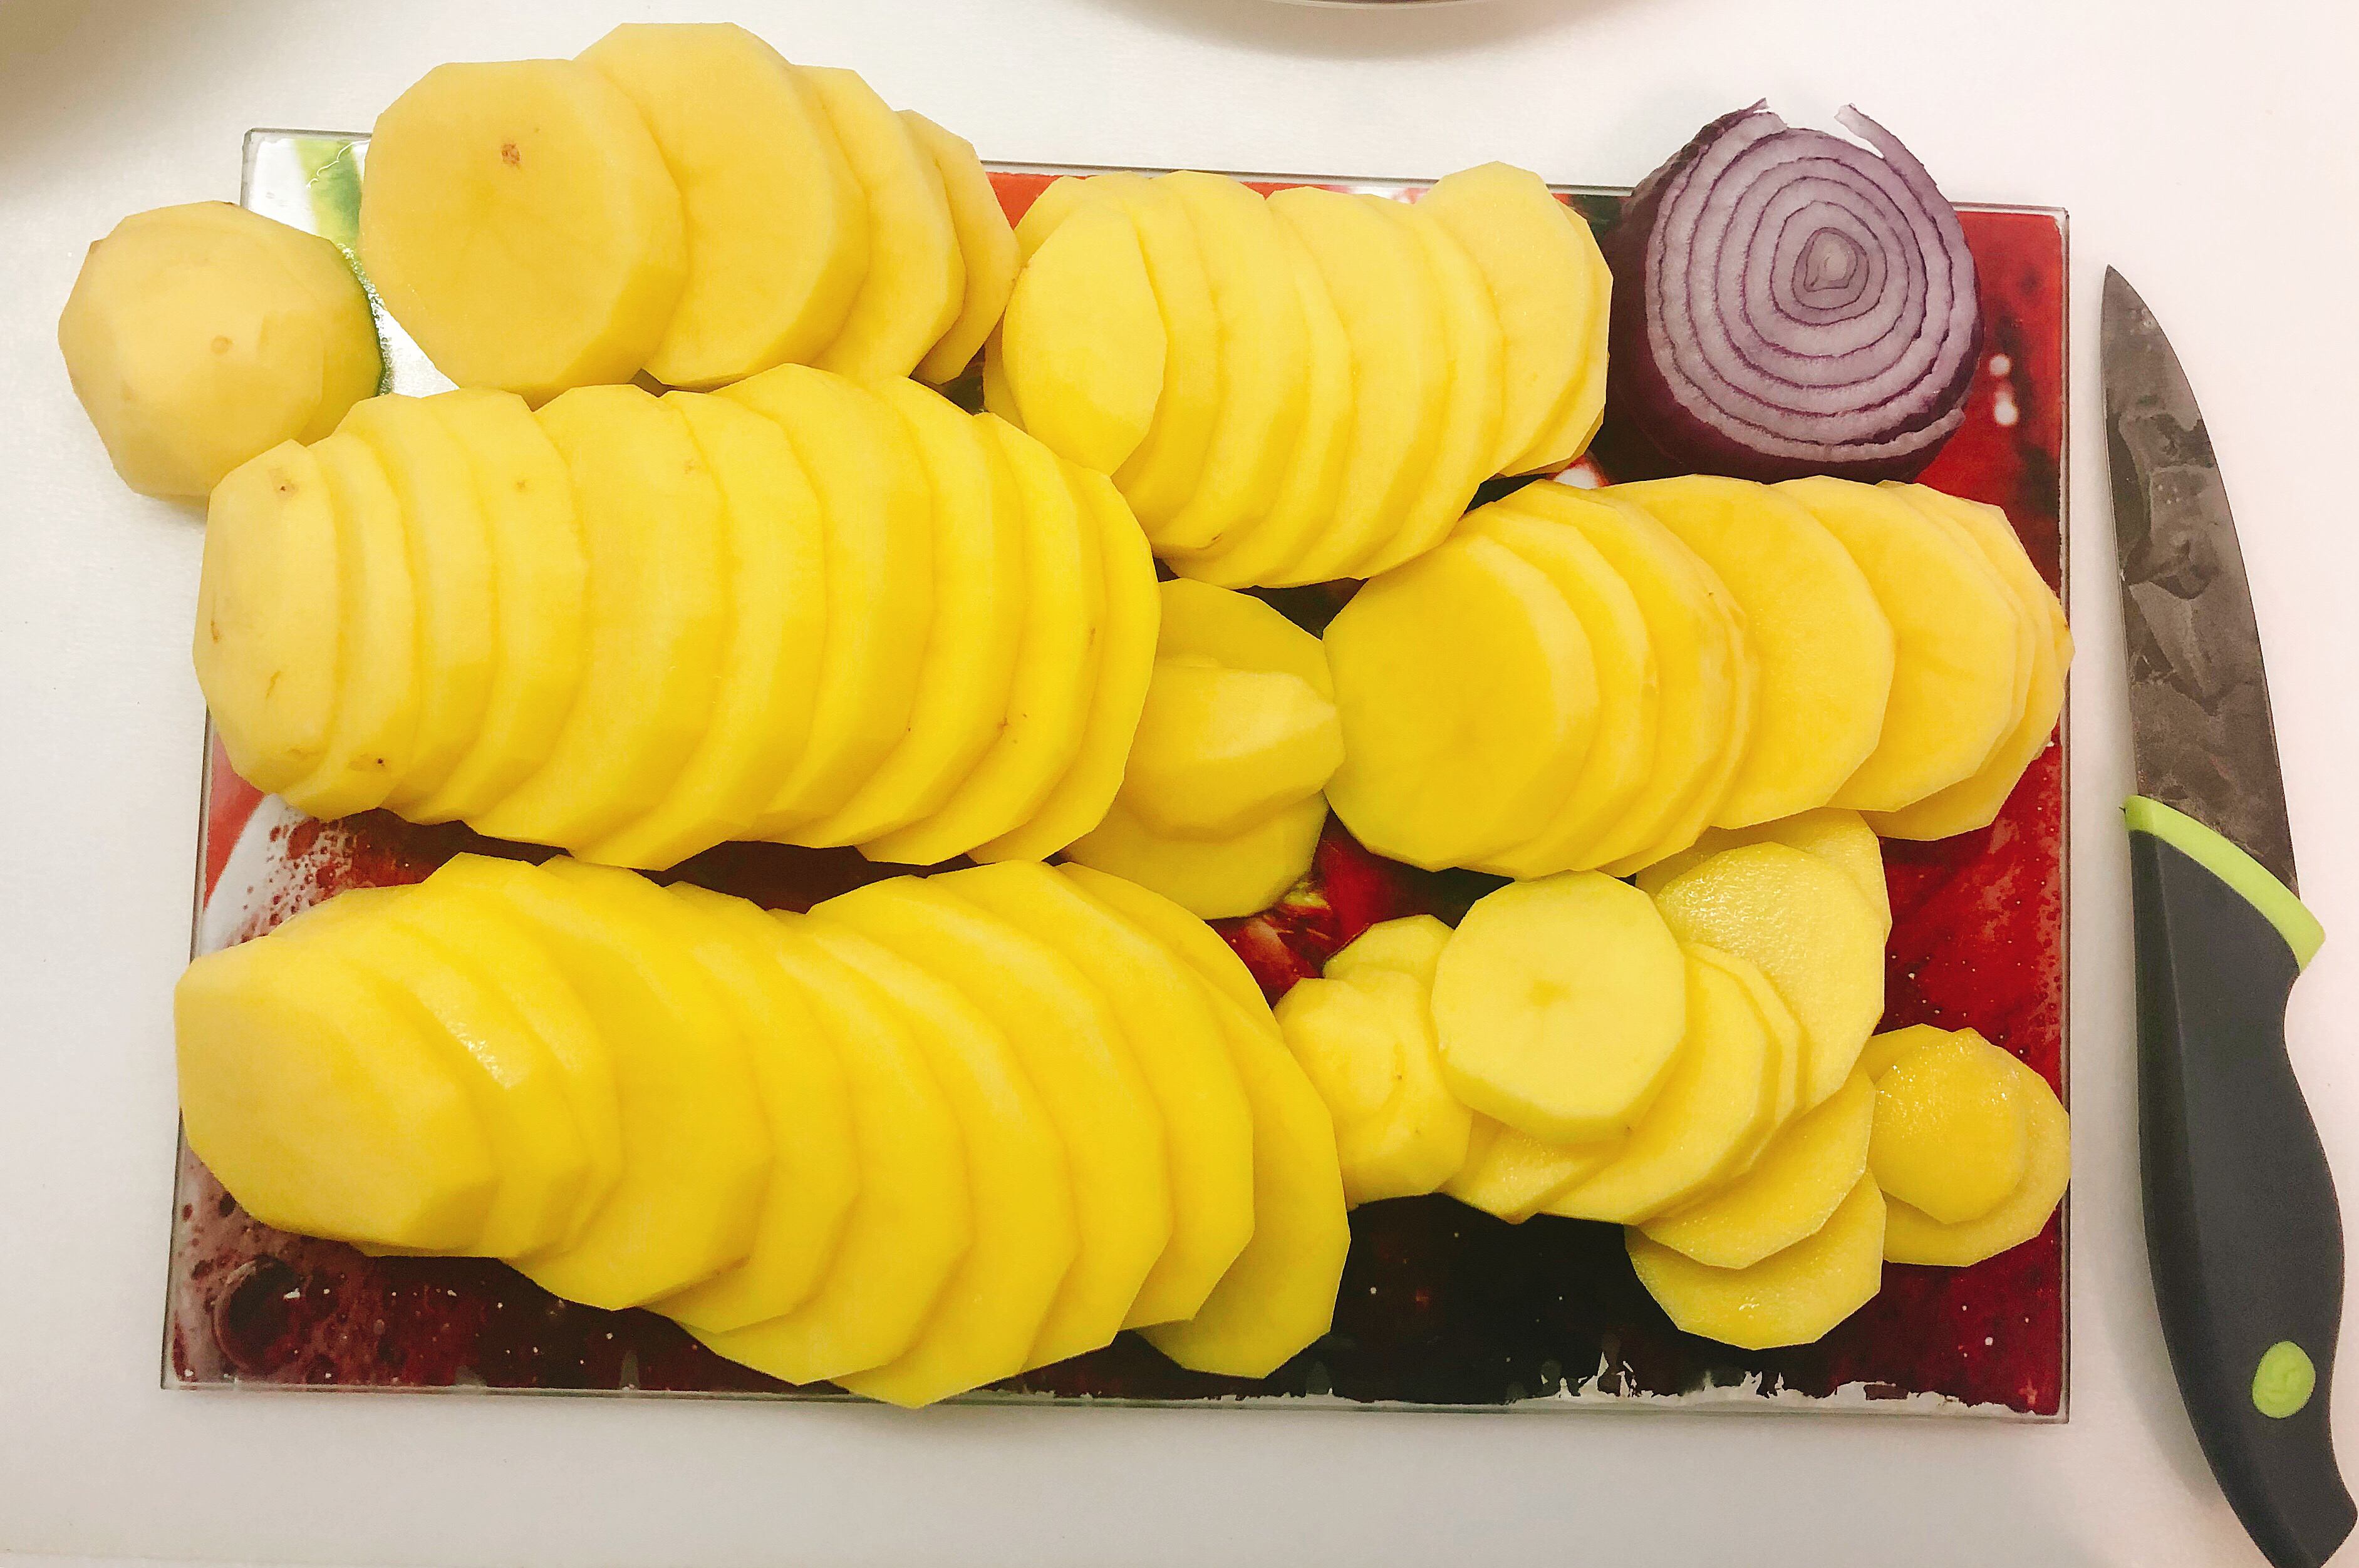 Circles of potatoes and onion